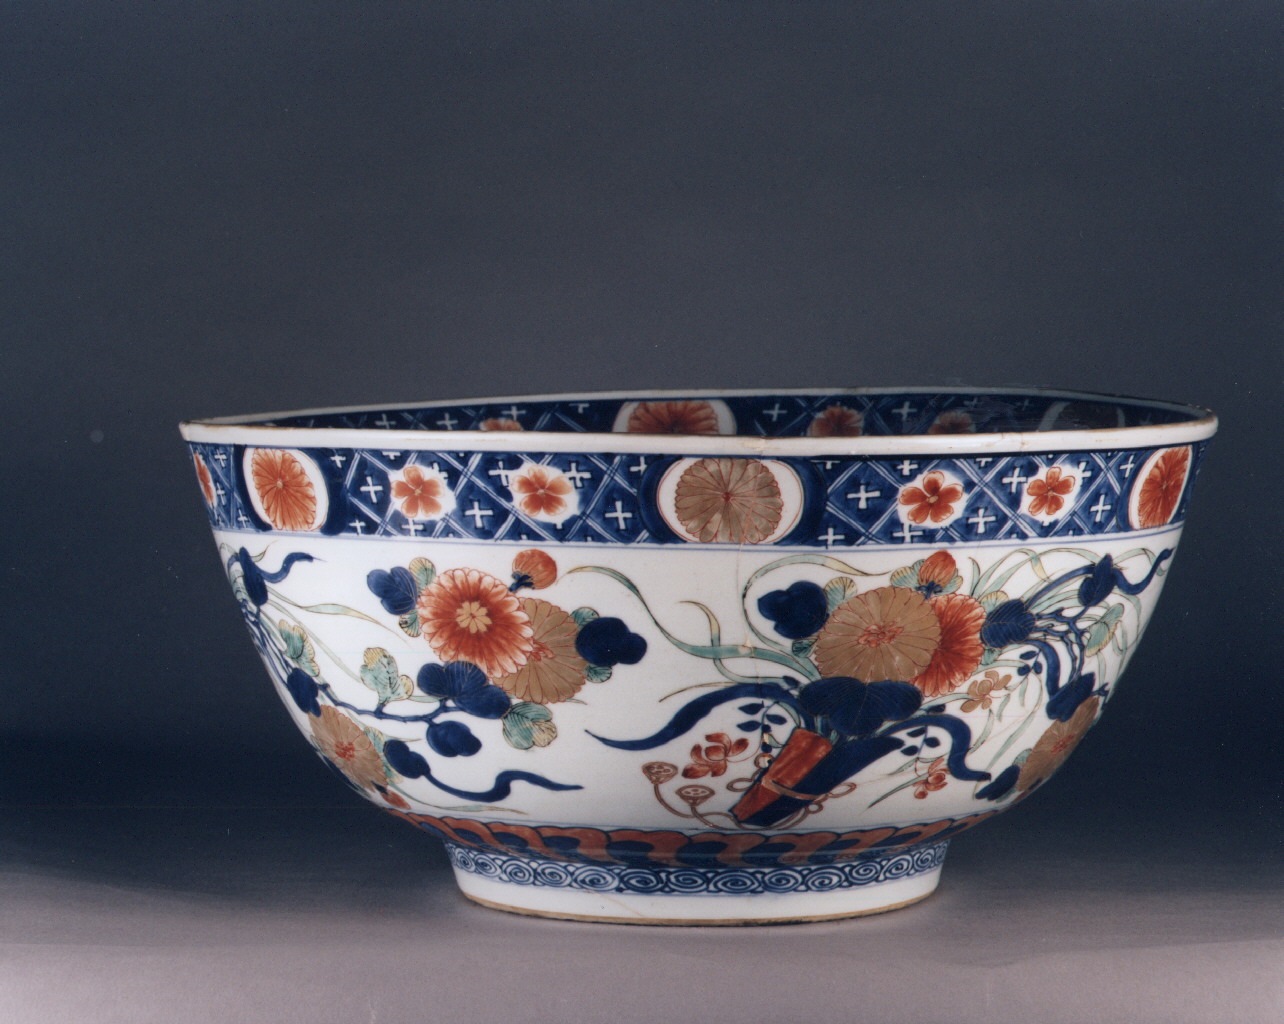 motivi decorativi vegetali (coppa) - manifattura di Jingdezhen (sec. XVIII)